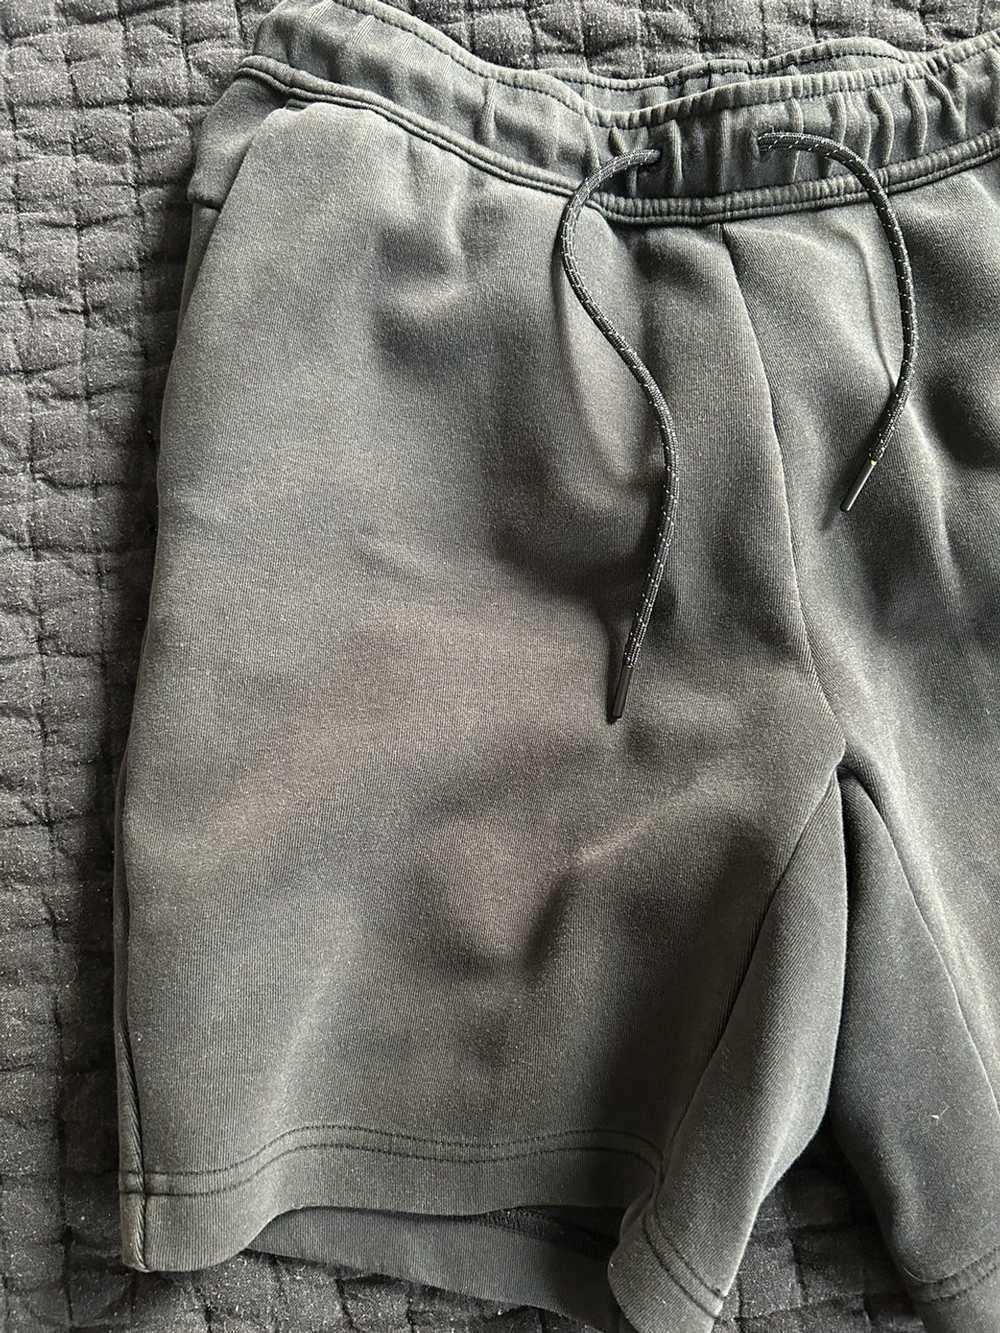 Nike Nike tech fleece shorts - small - image 6